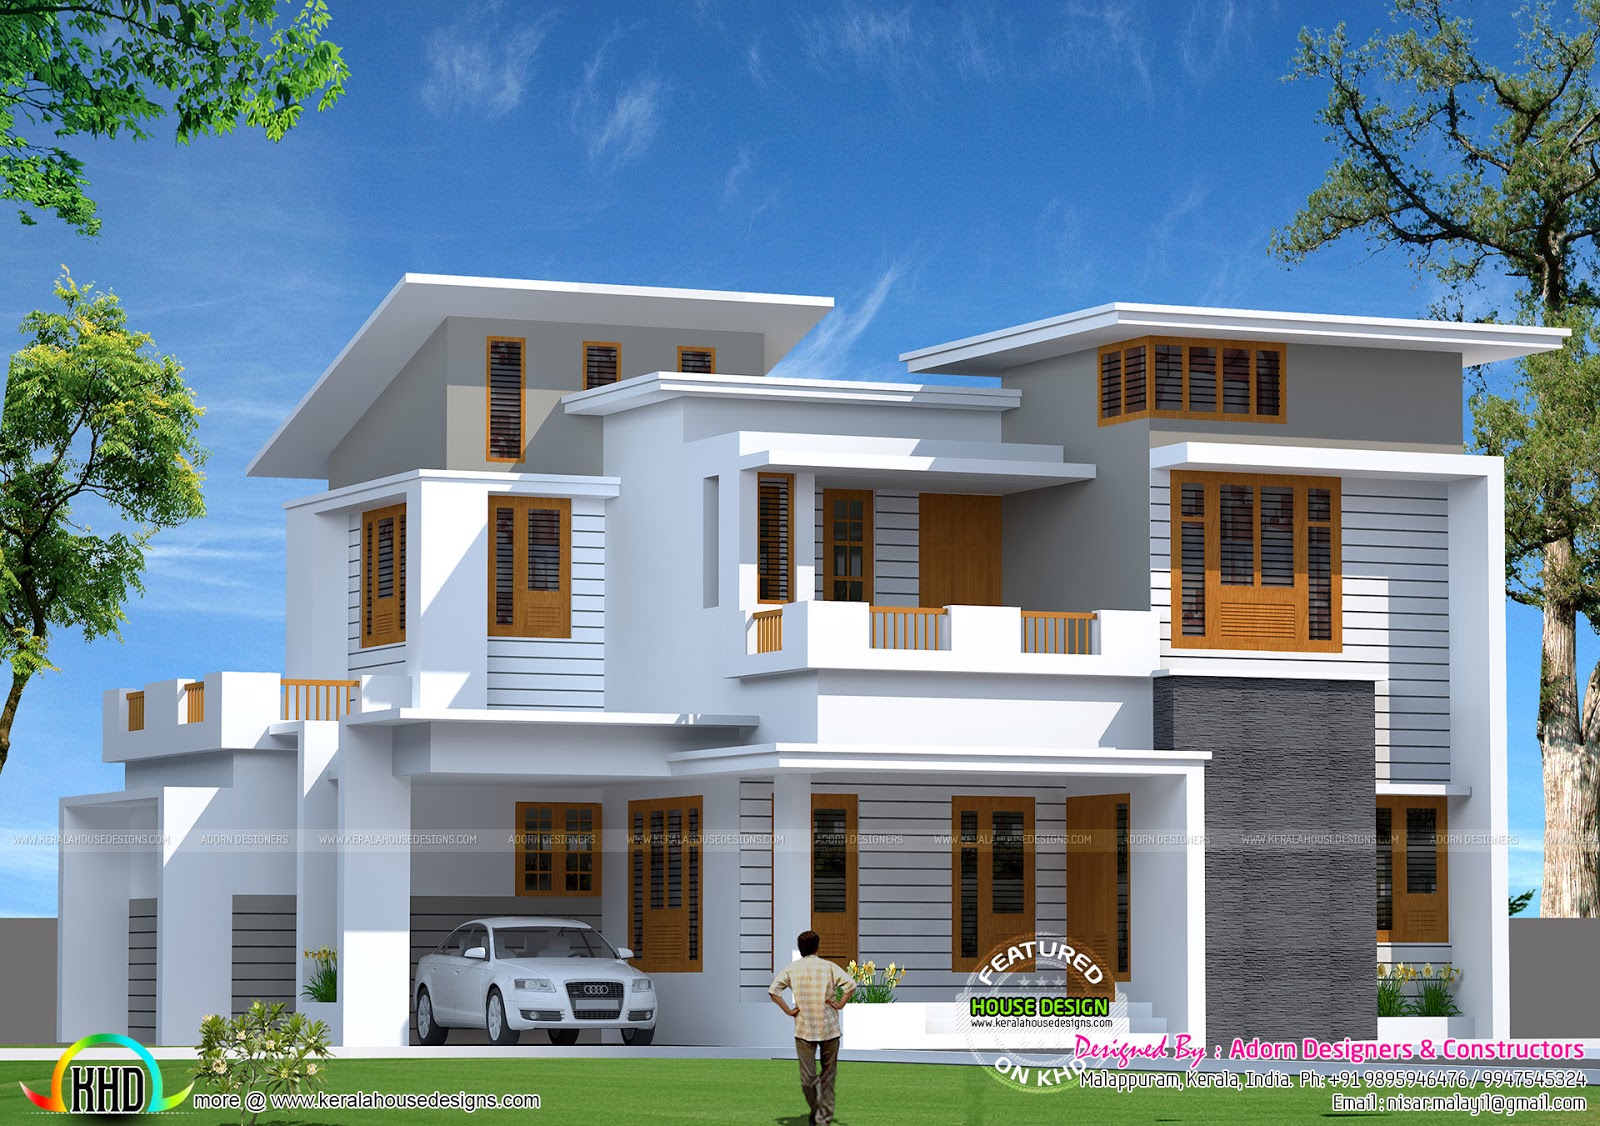  1800  square  feet  slanting roof mix home  Kerala  home  